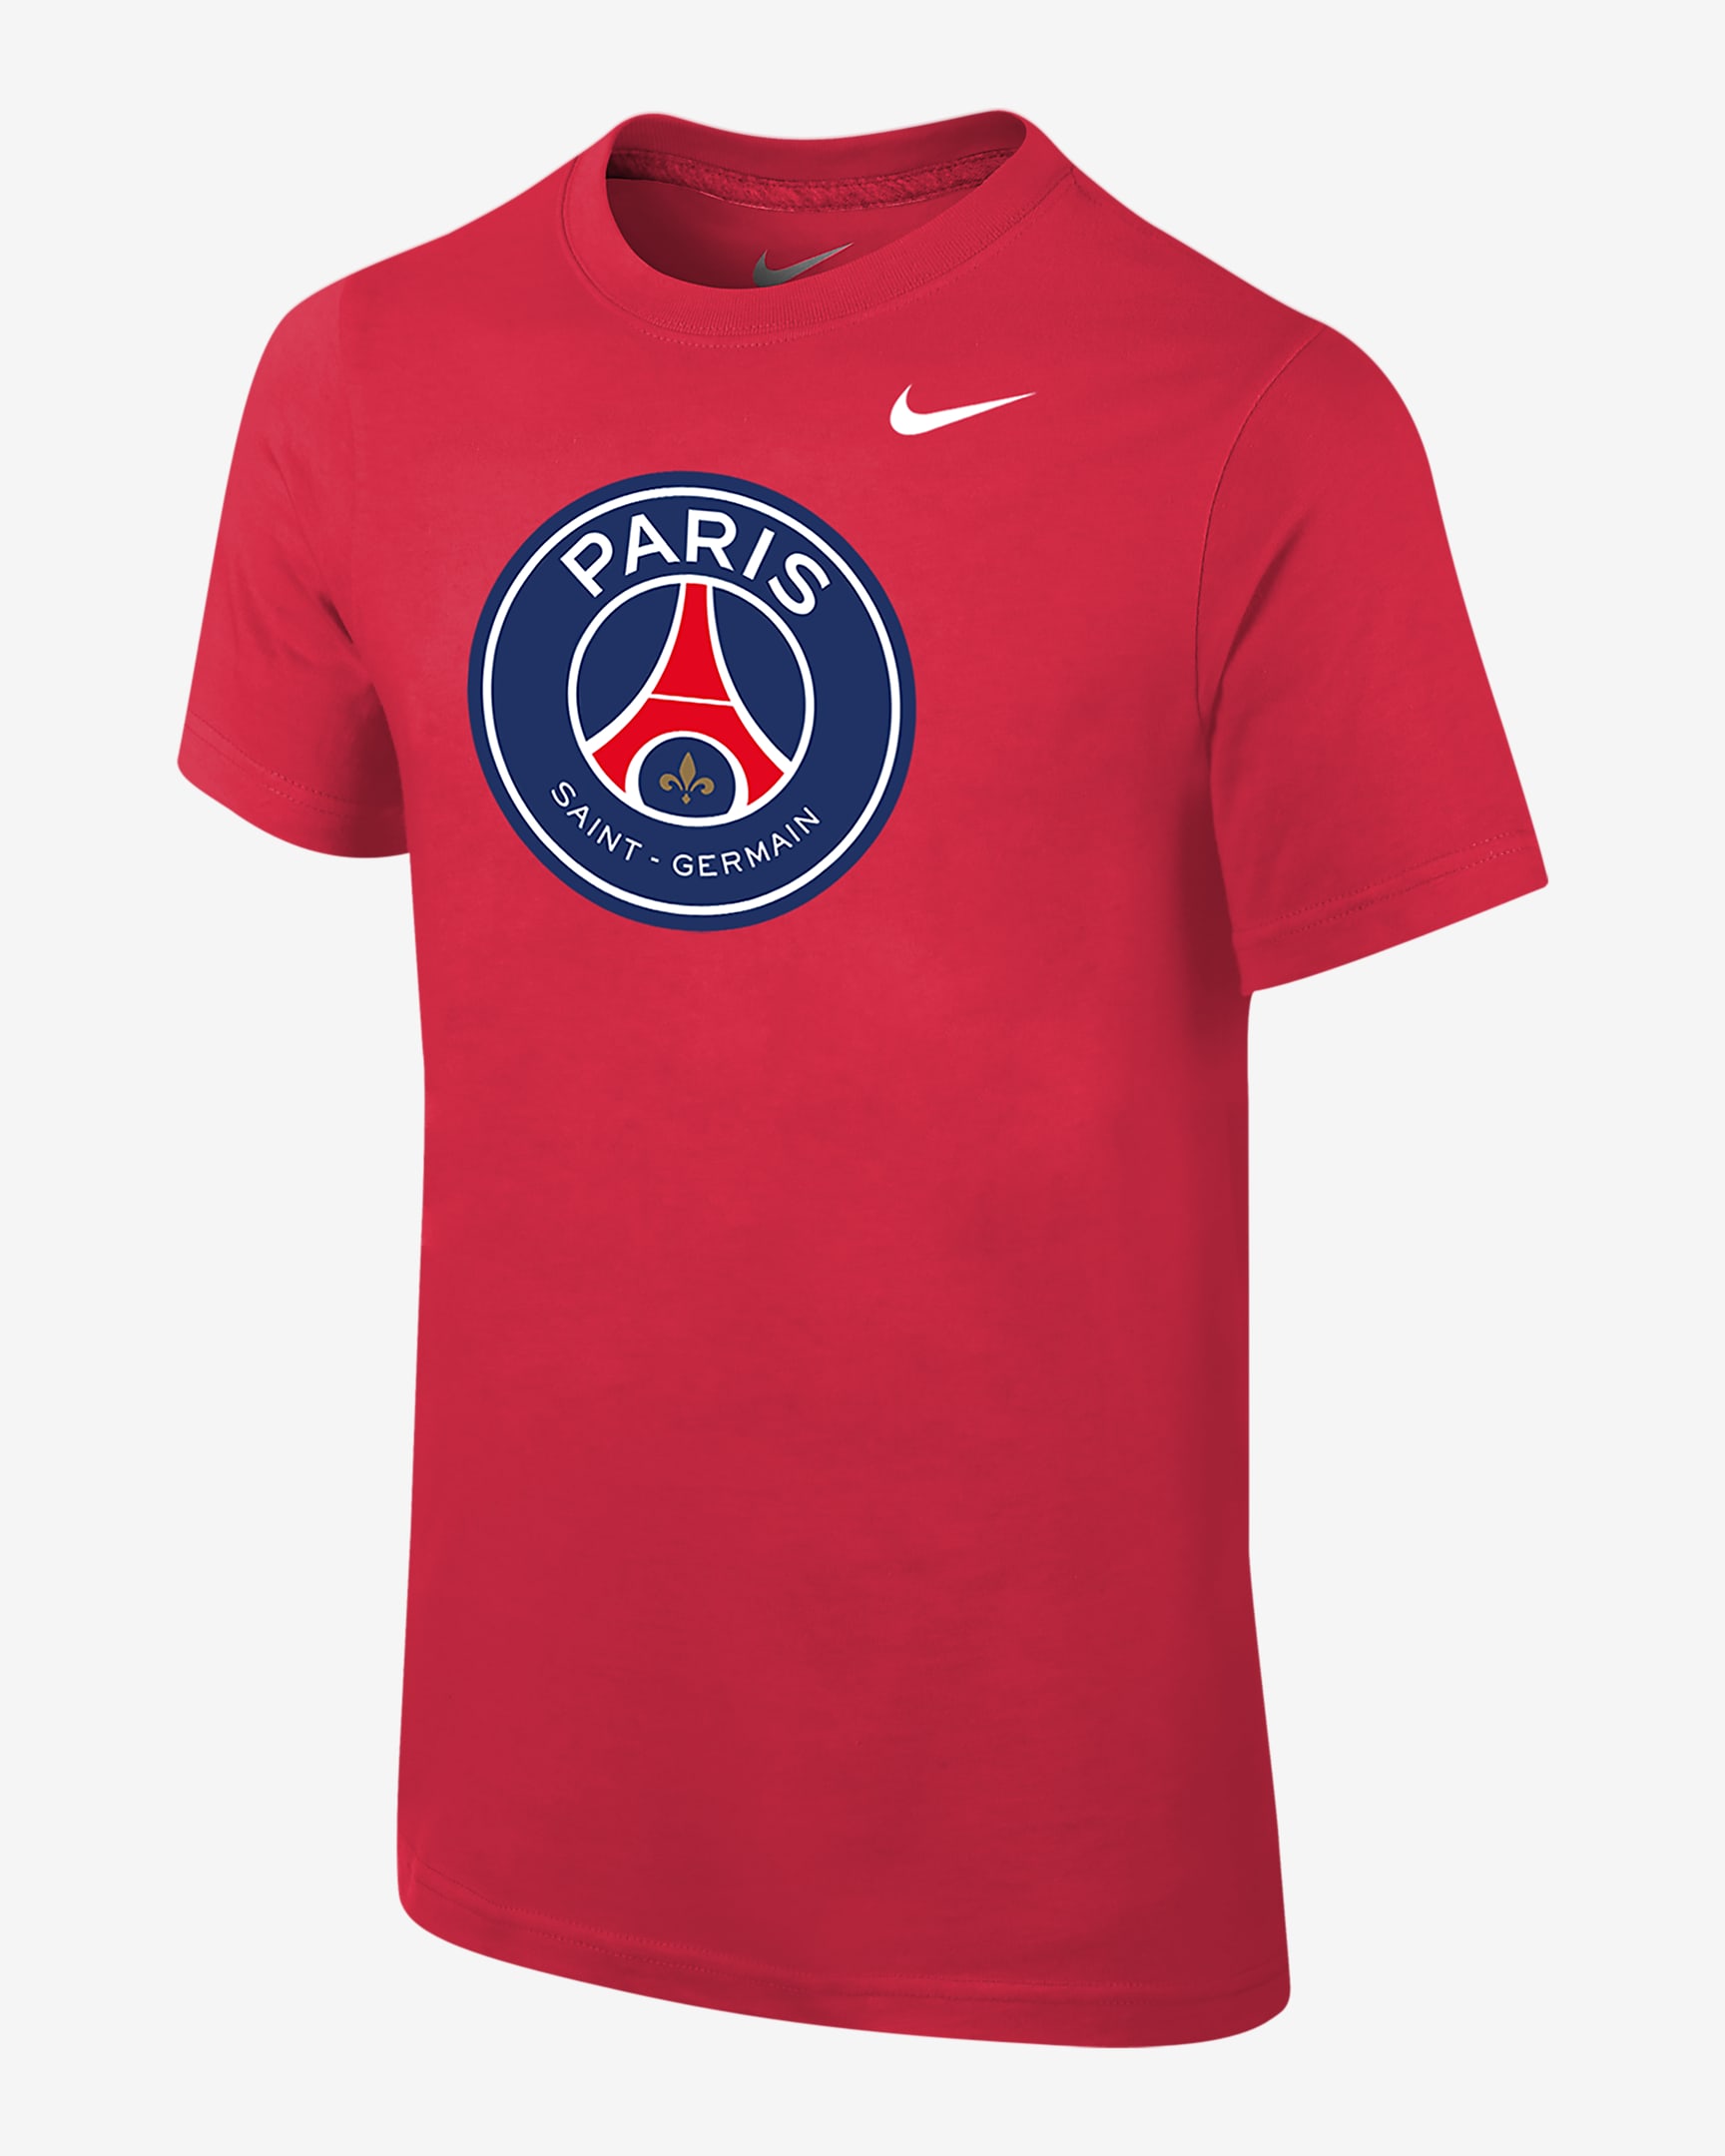 Paris Saint-Germain Big Kids' T-Shirt. Nike.com